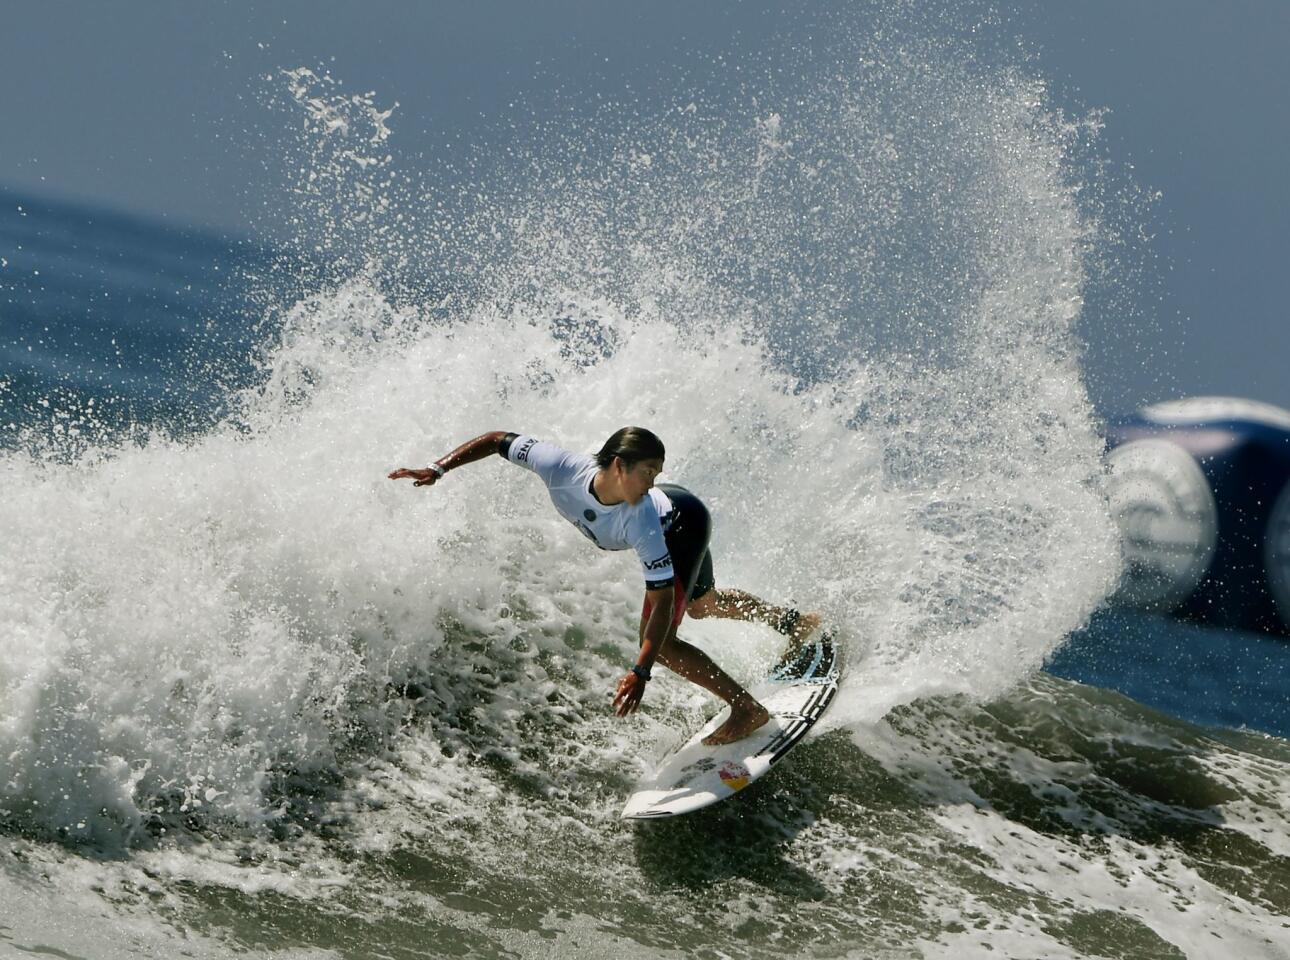 2017 U.S. Open of Surfing